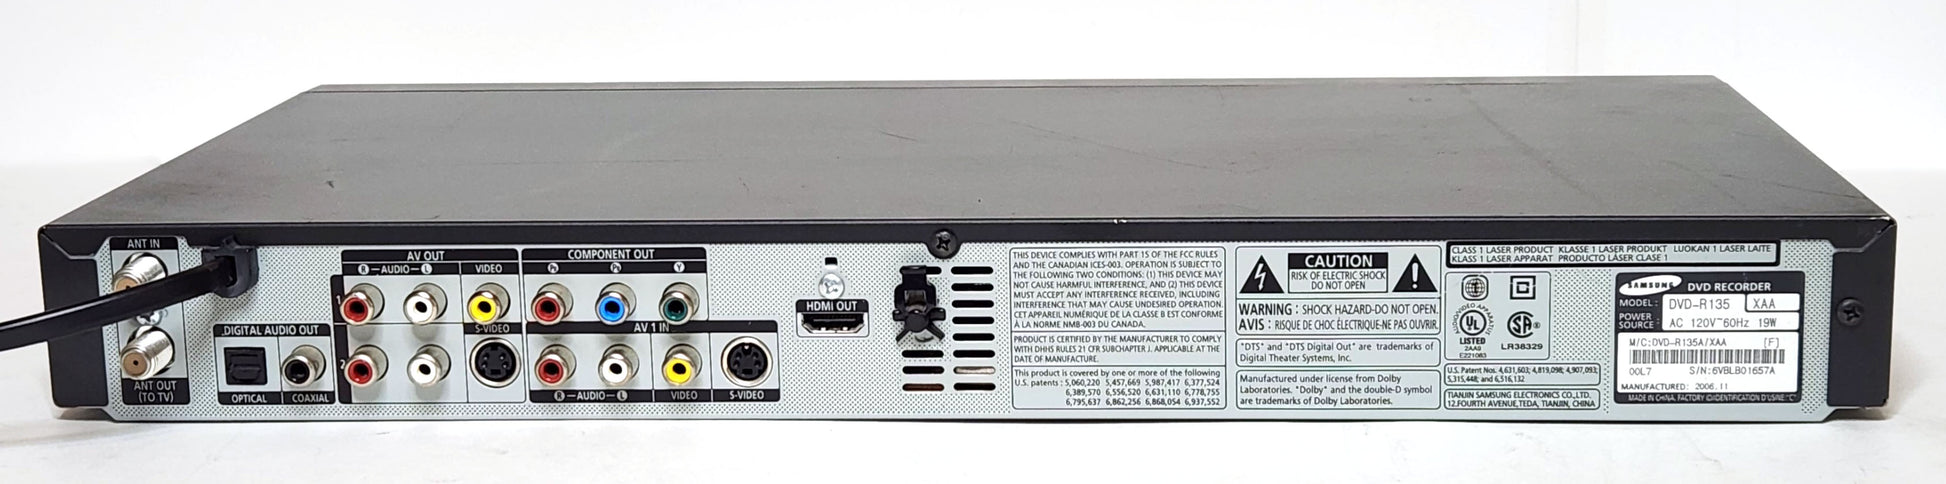 Samsung DVD-R135 DVD Recorder with HDMI - Rear